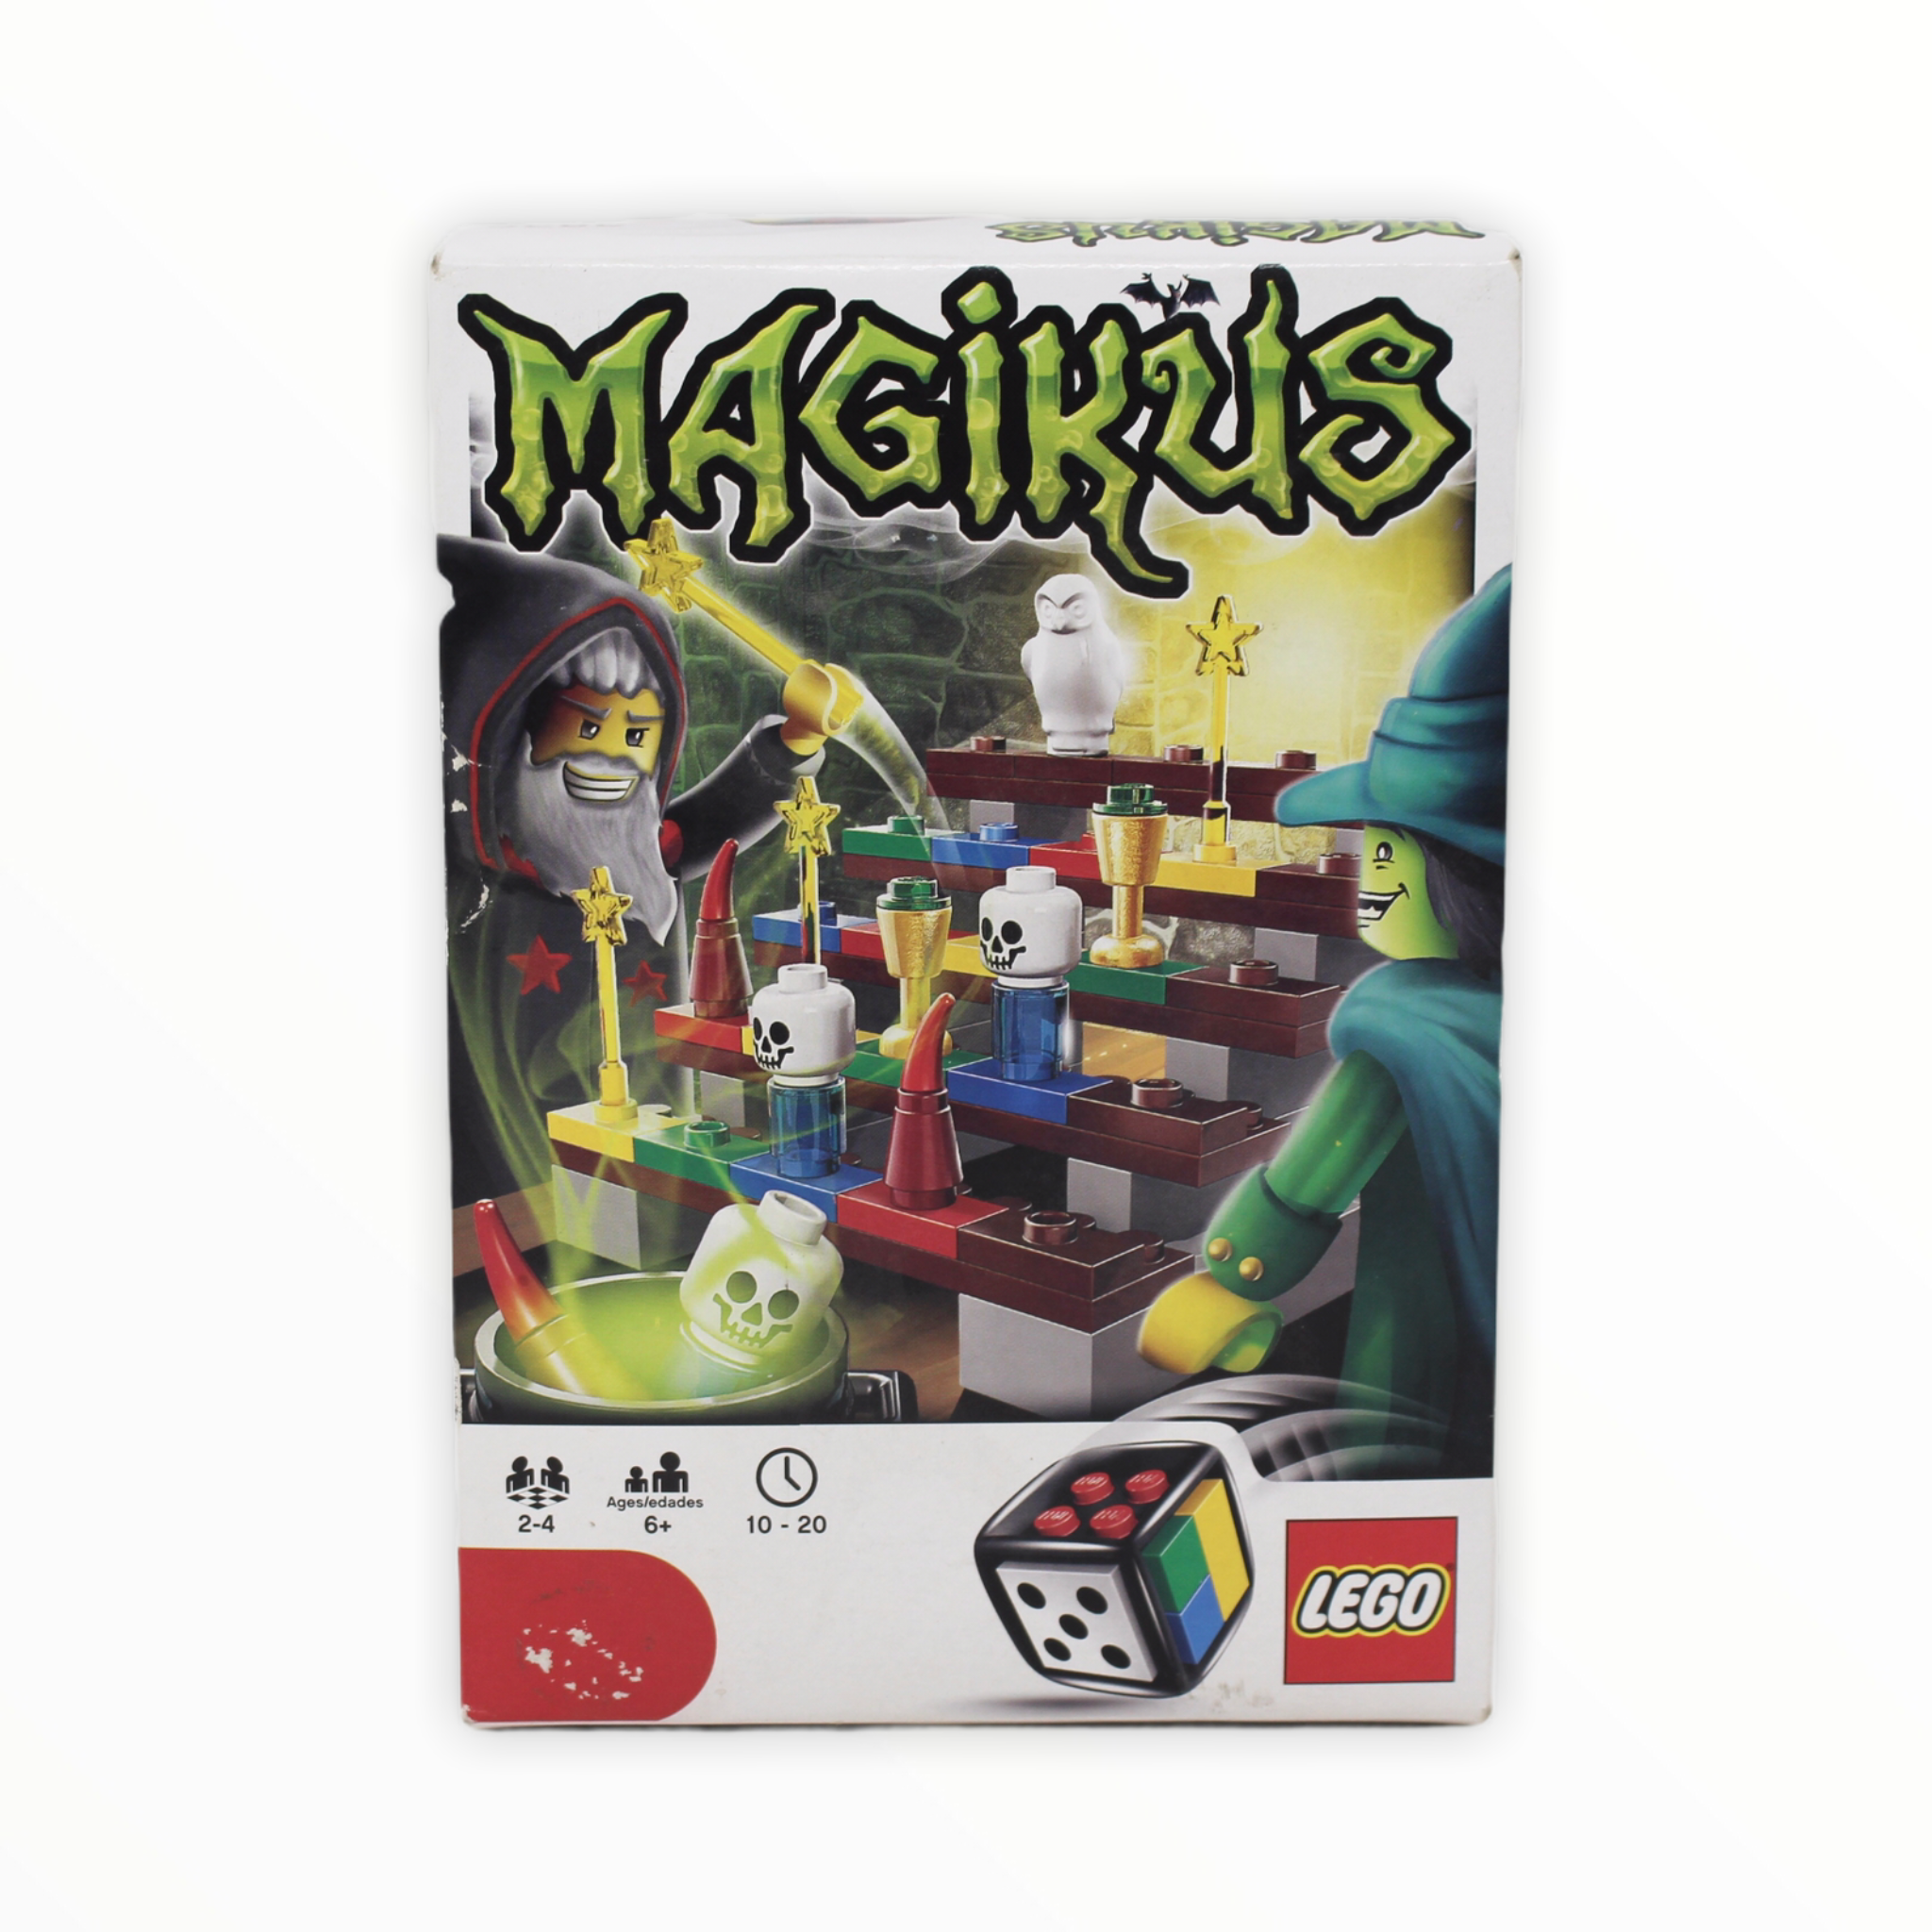 Certified Used Set 3836 LEGO Magikus